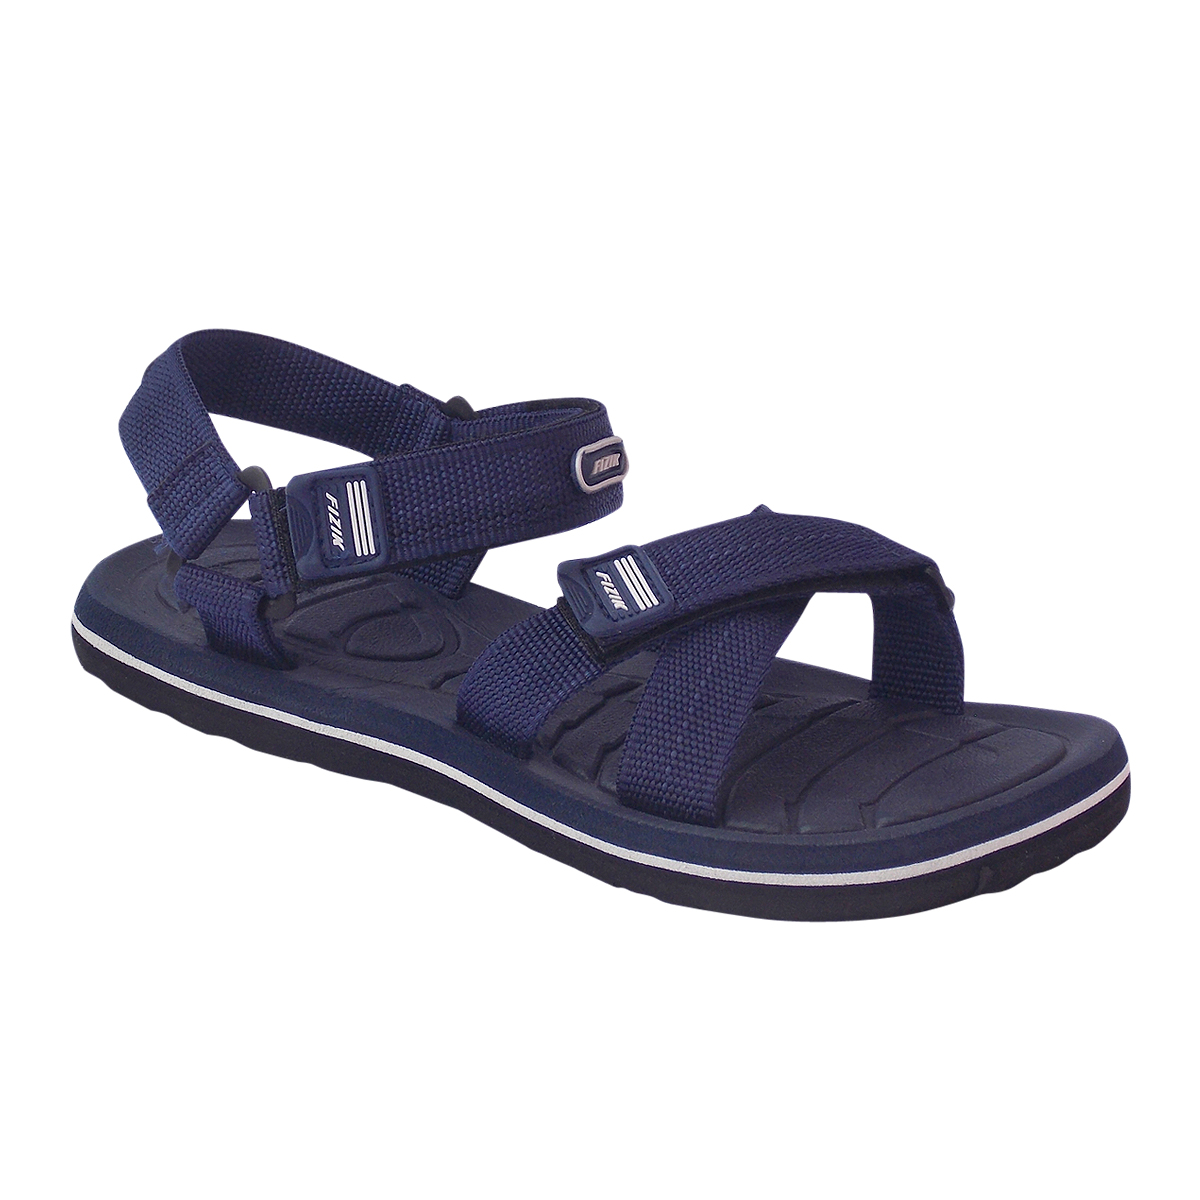 Buy Fizik Men's Blue Velcro Sandals Online @ ₹349 from ShopClues